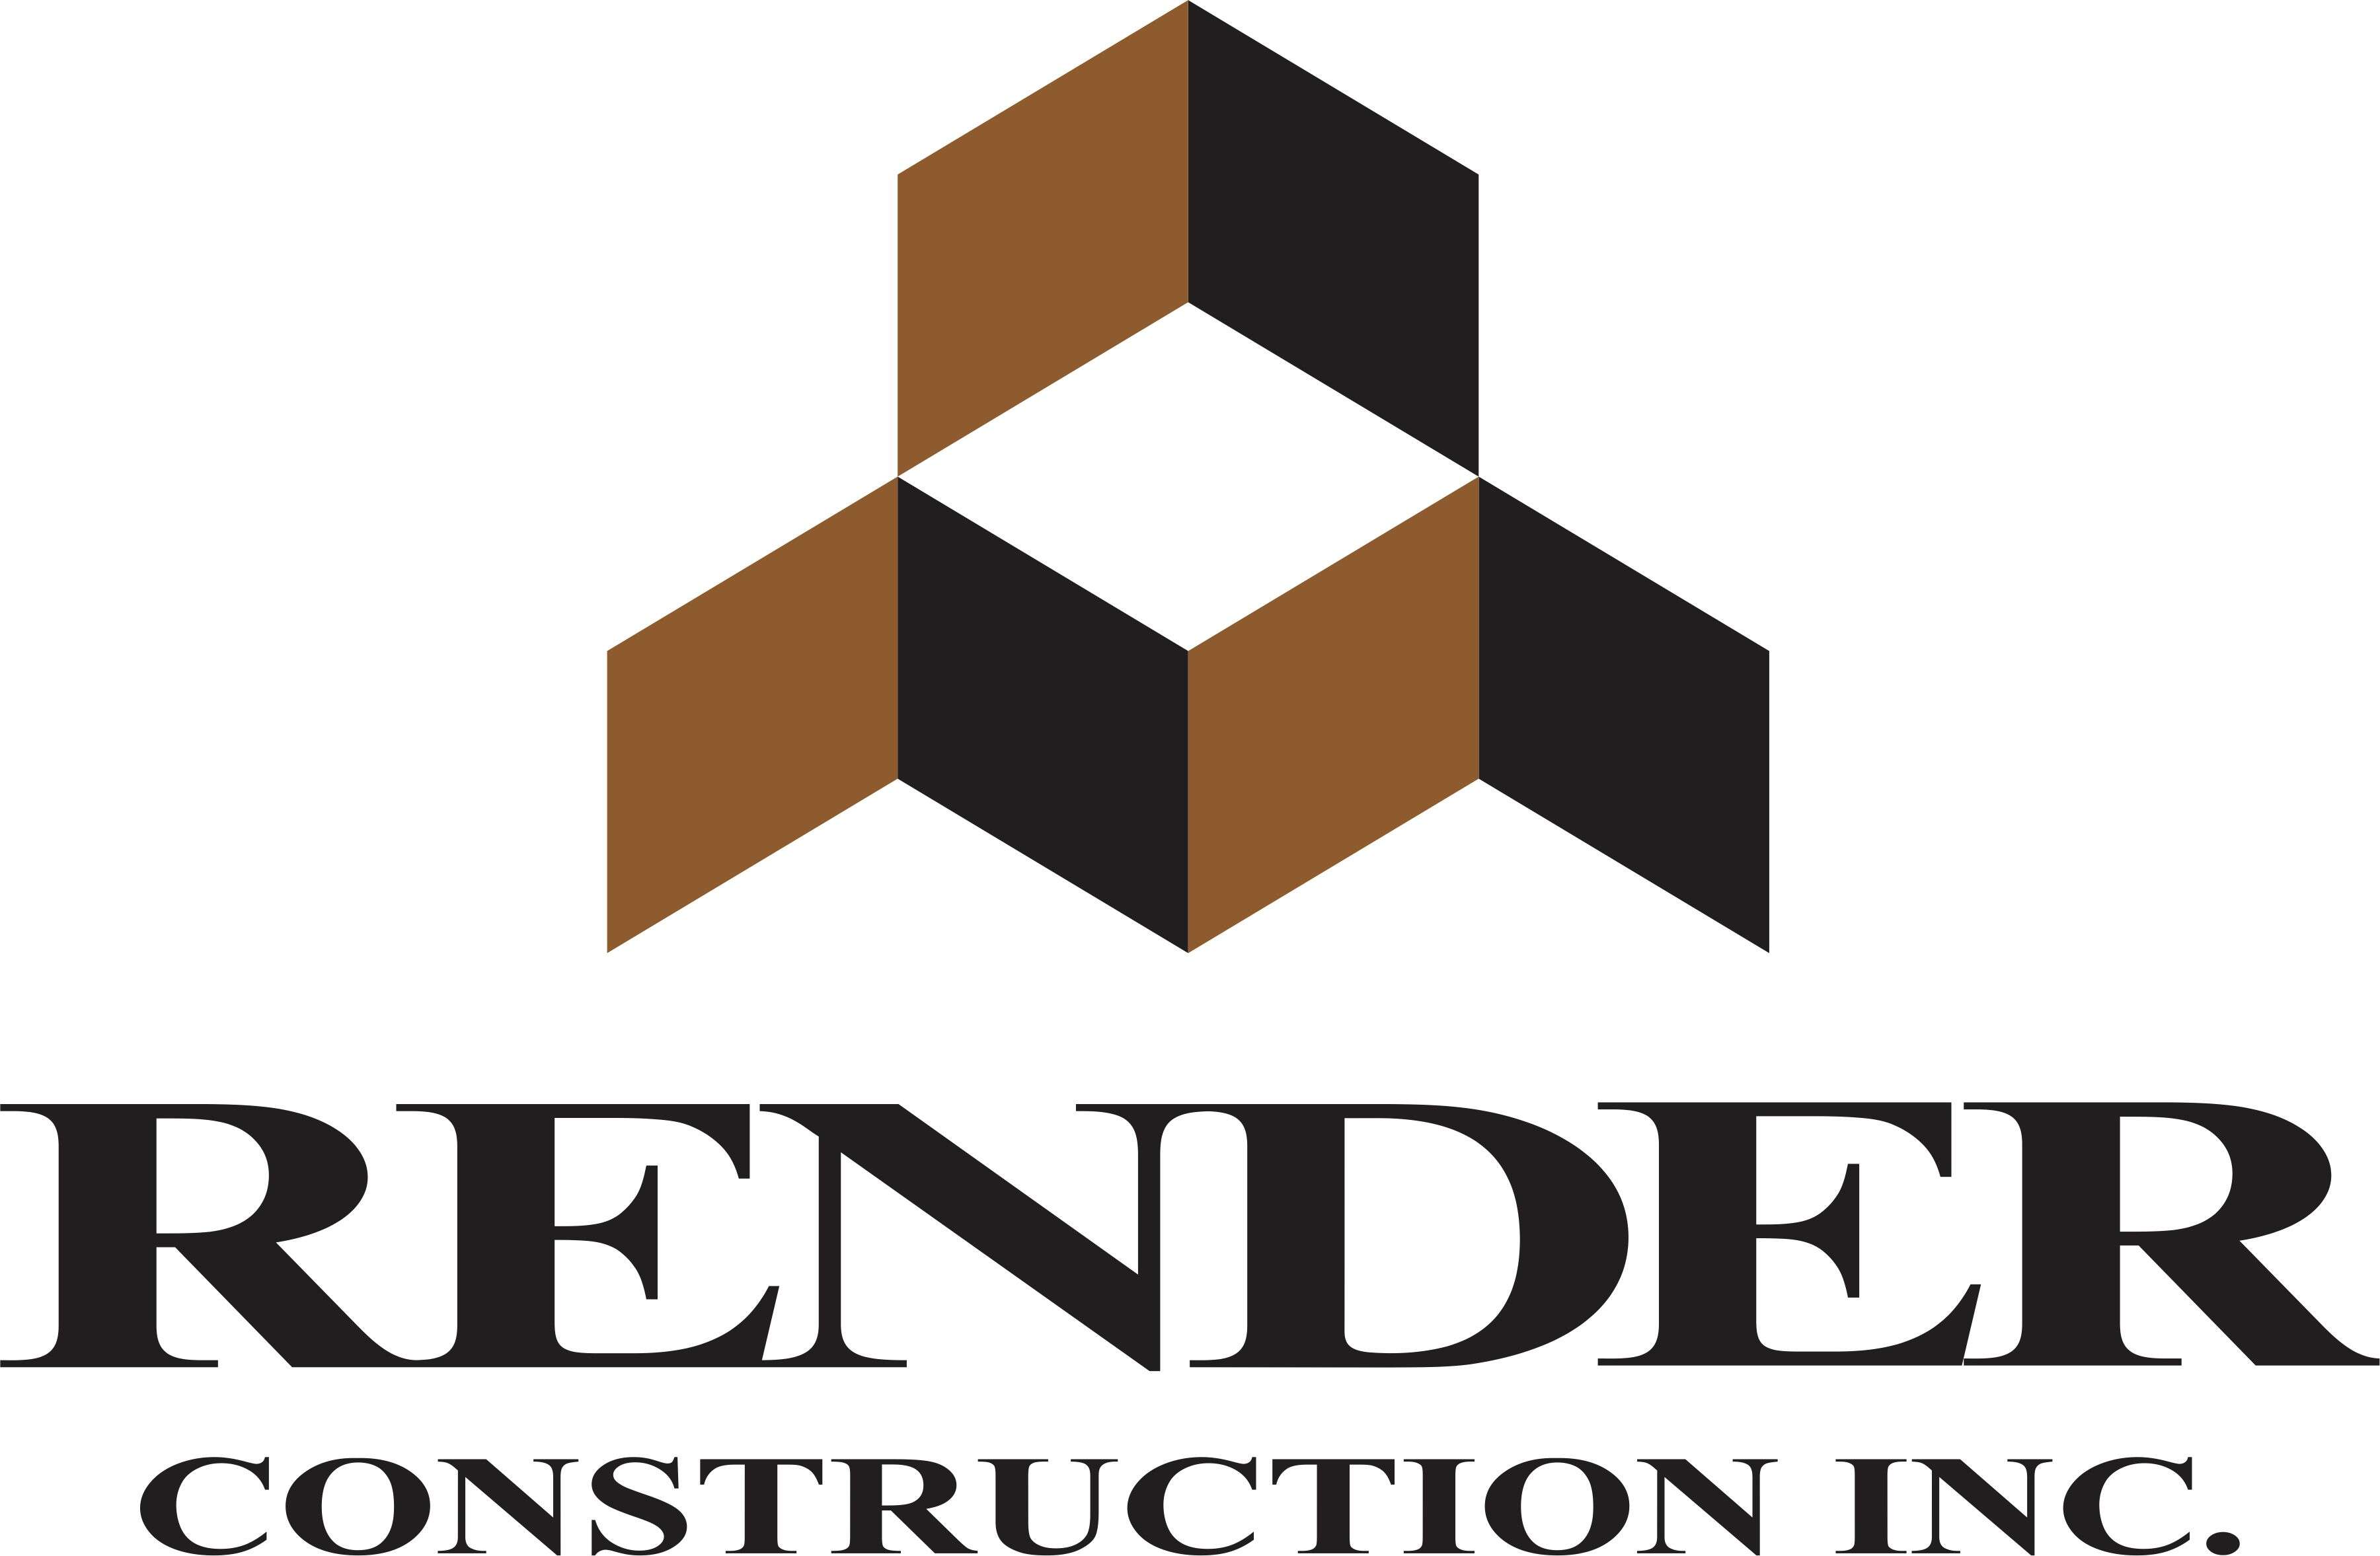 Render Construction Inc